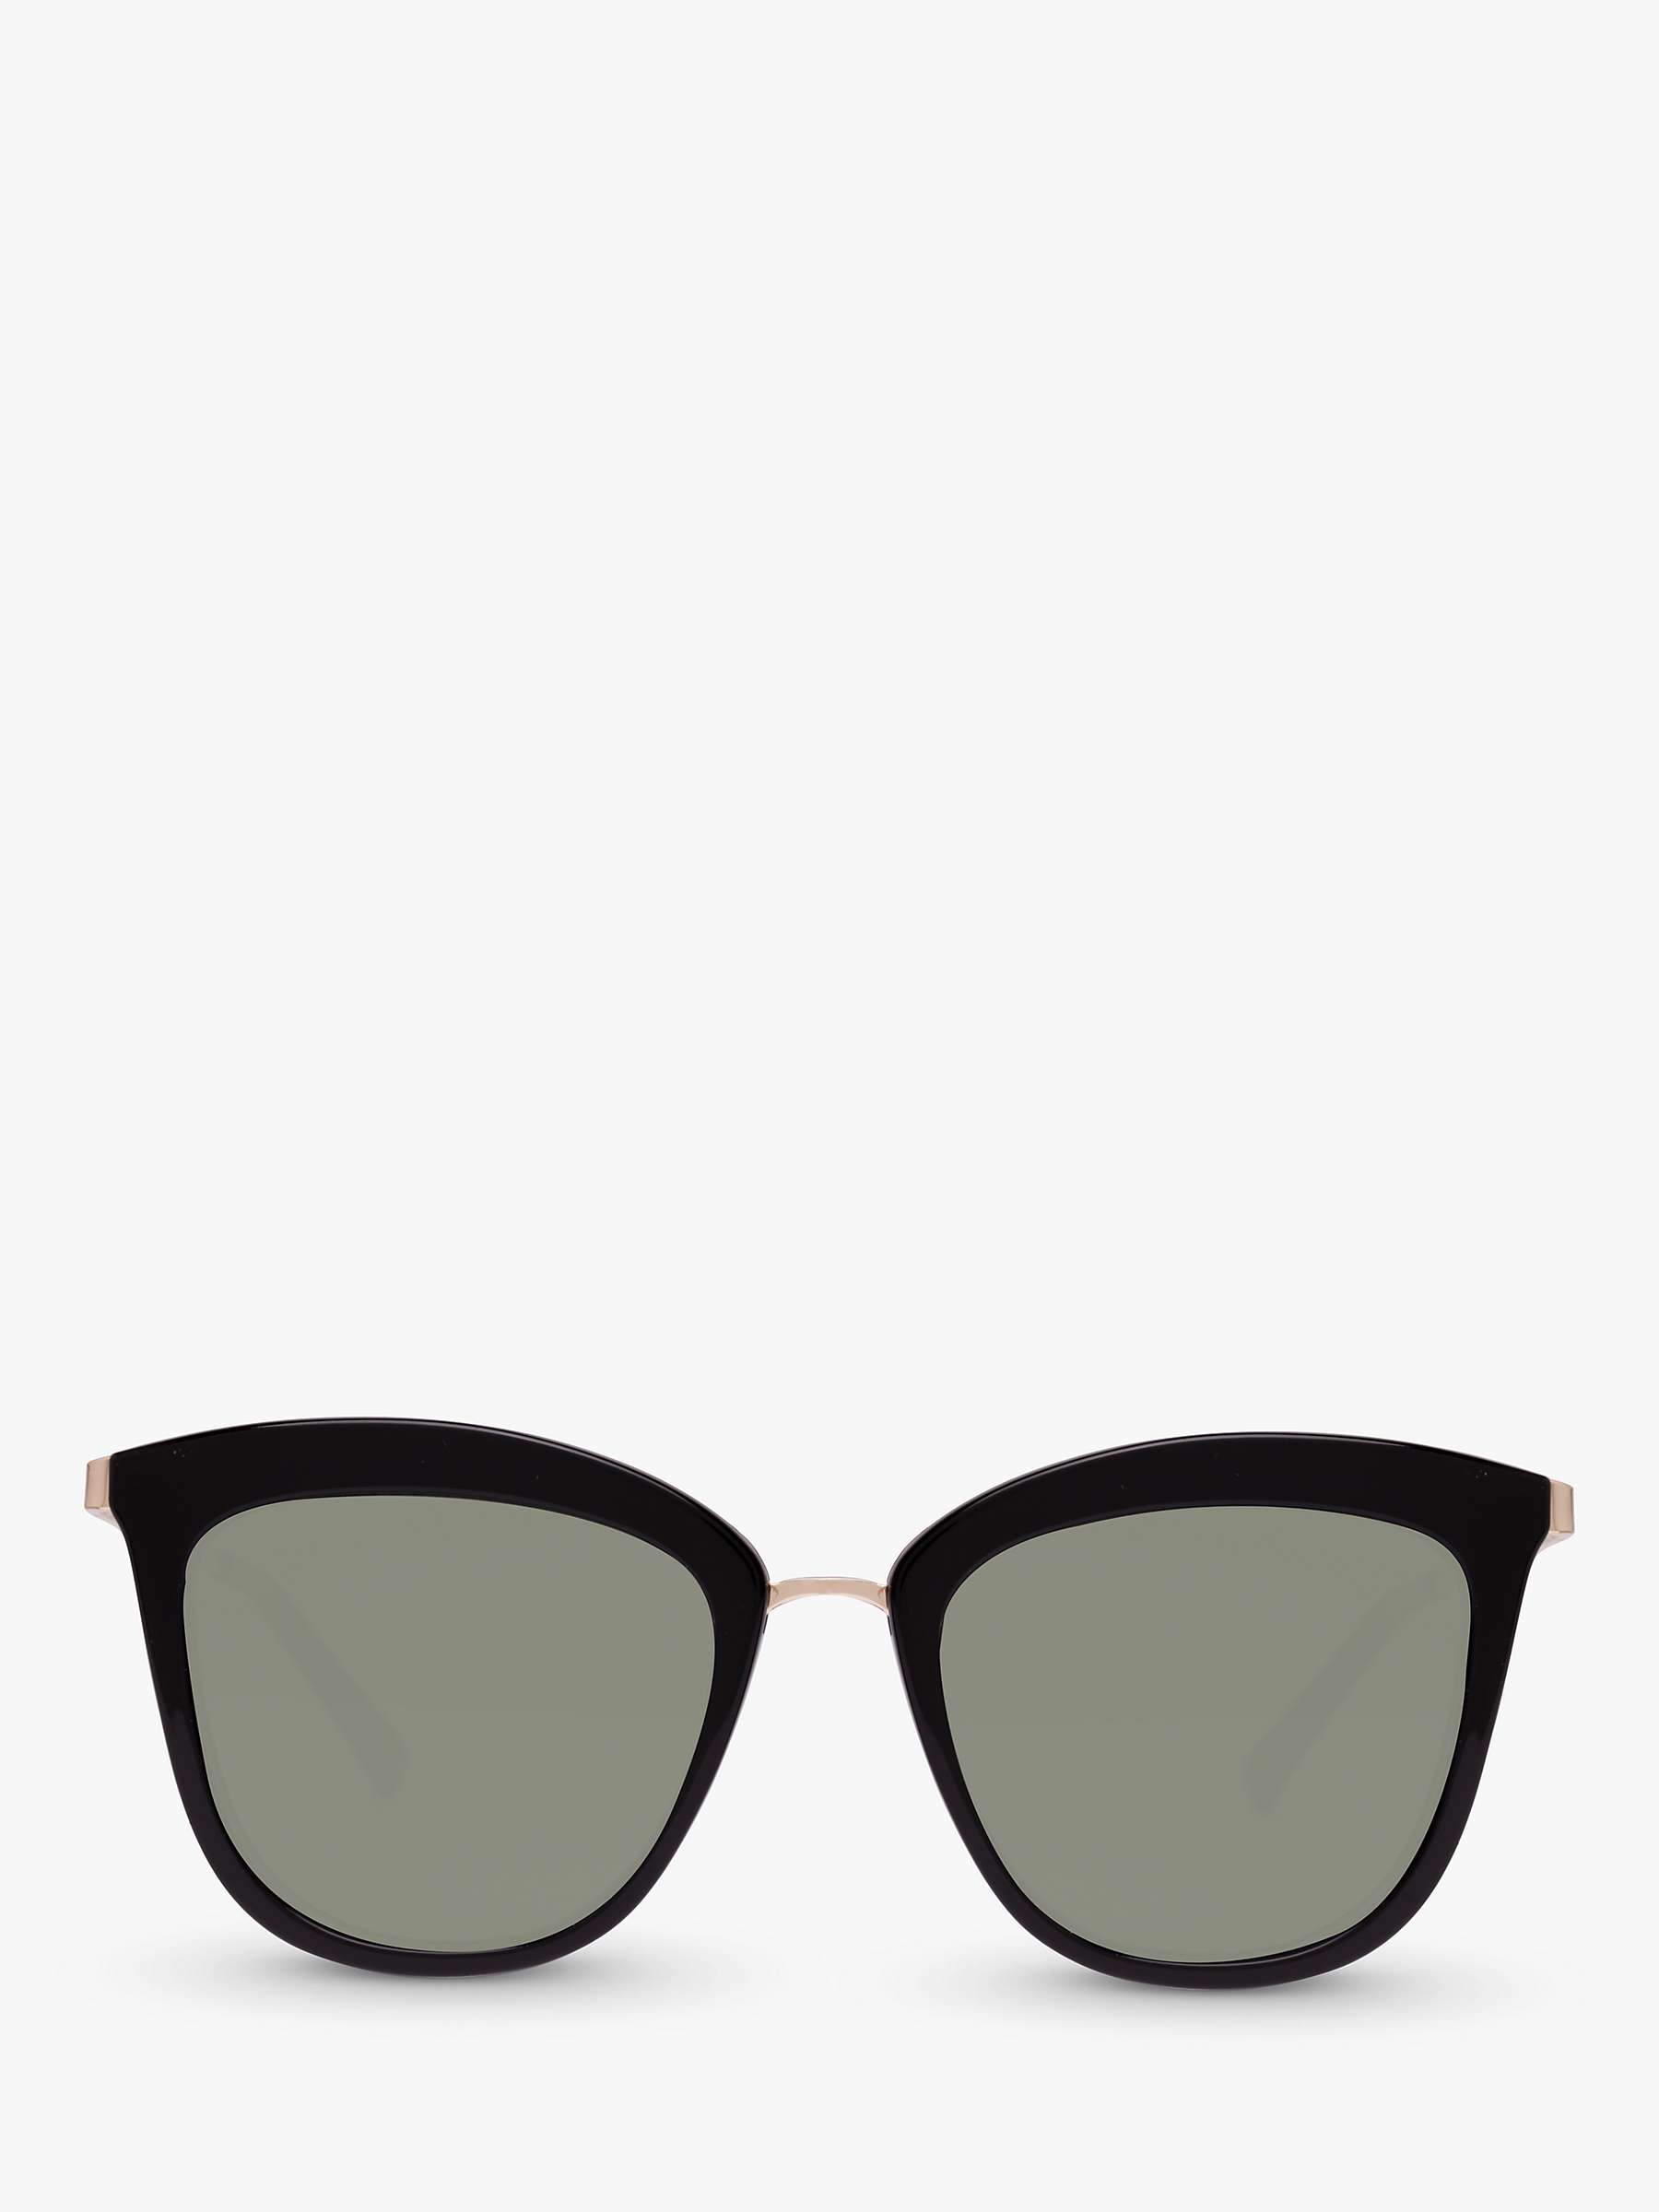 Buy Le Specs Women's Caliente Cat's Eye Sunglasses, Black Gold Online at johnlewis.com